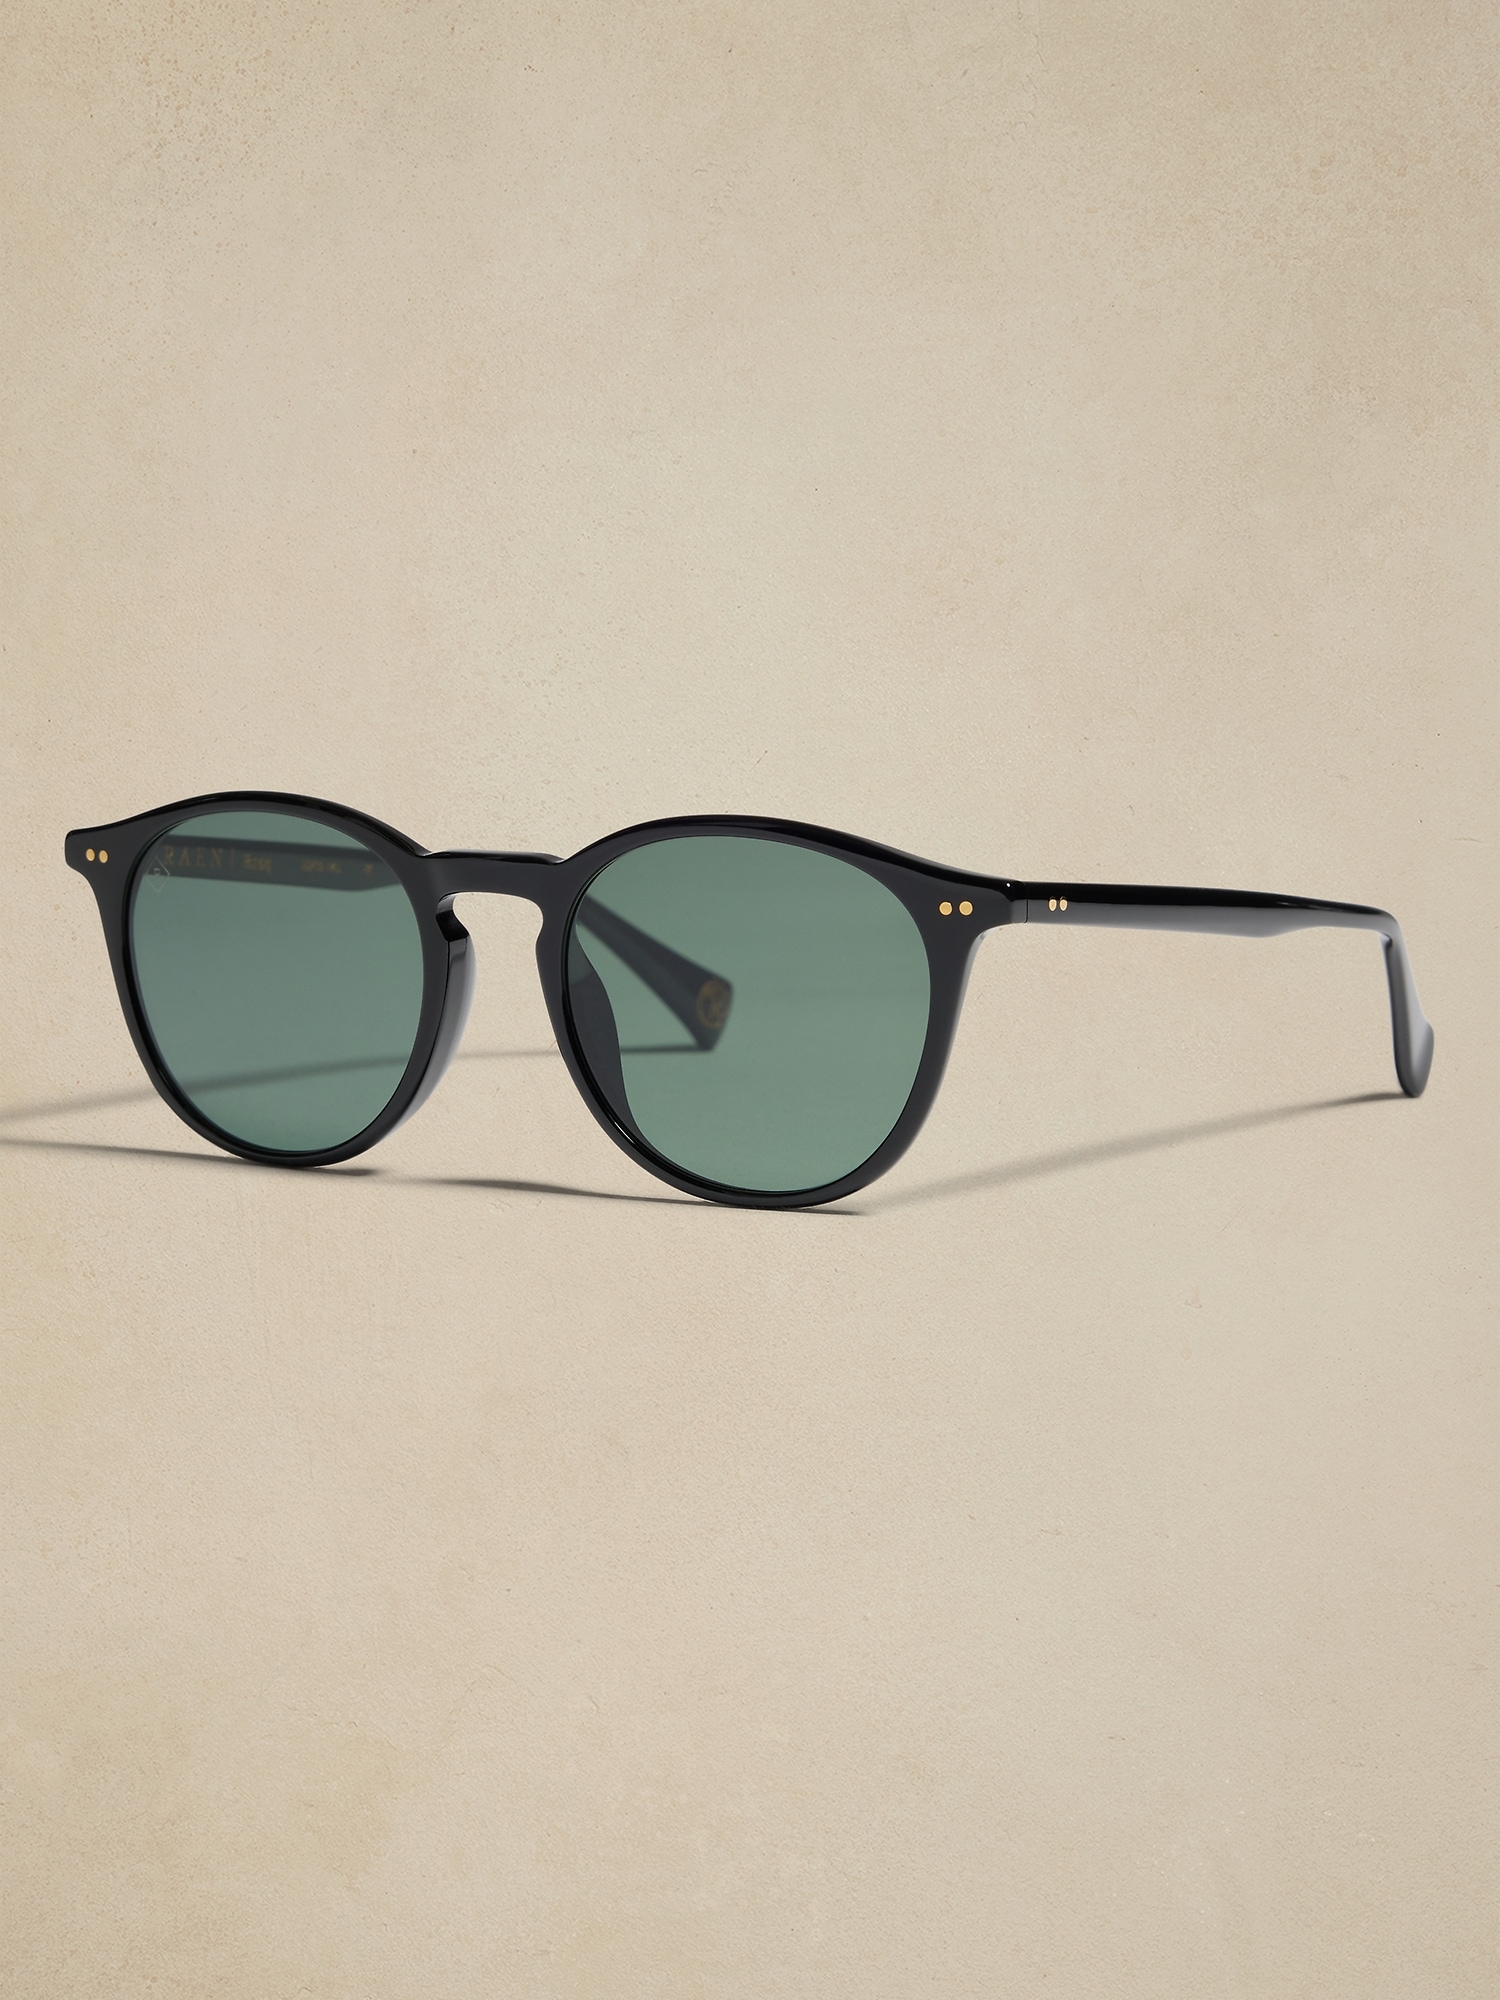 Rb4180|barcur Polarized Sunglasses For Men - Uv400 Protection, Wayfarer Ii  Style